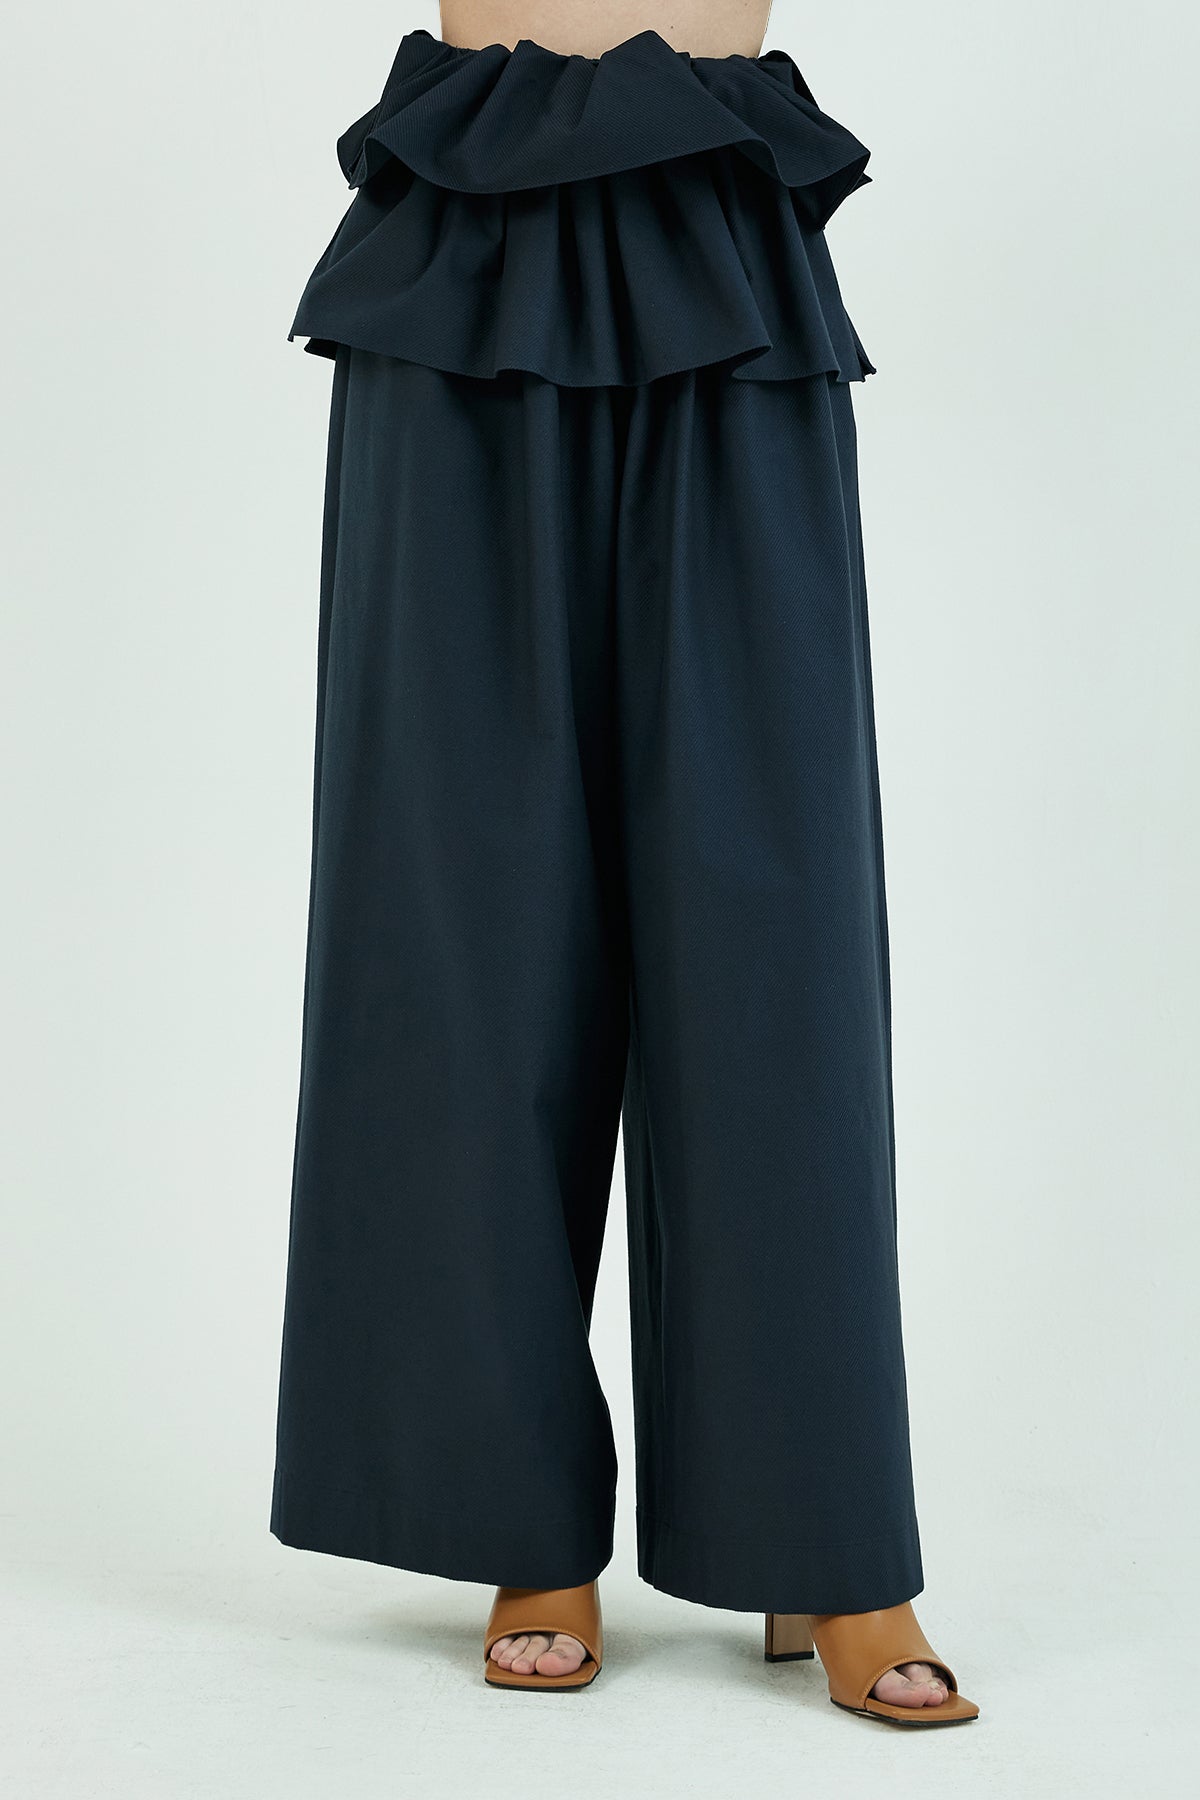 Buy Women's Ruffle Palazzo Trouser Pant | Women's Ruffle Pants Split High  Waist Crepe Palazzo Overlay Pant Skirt (M-01) at Amazon.in